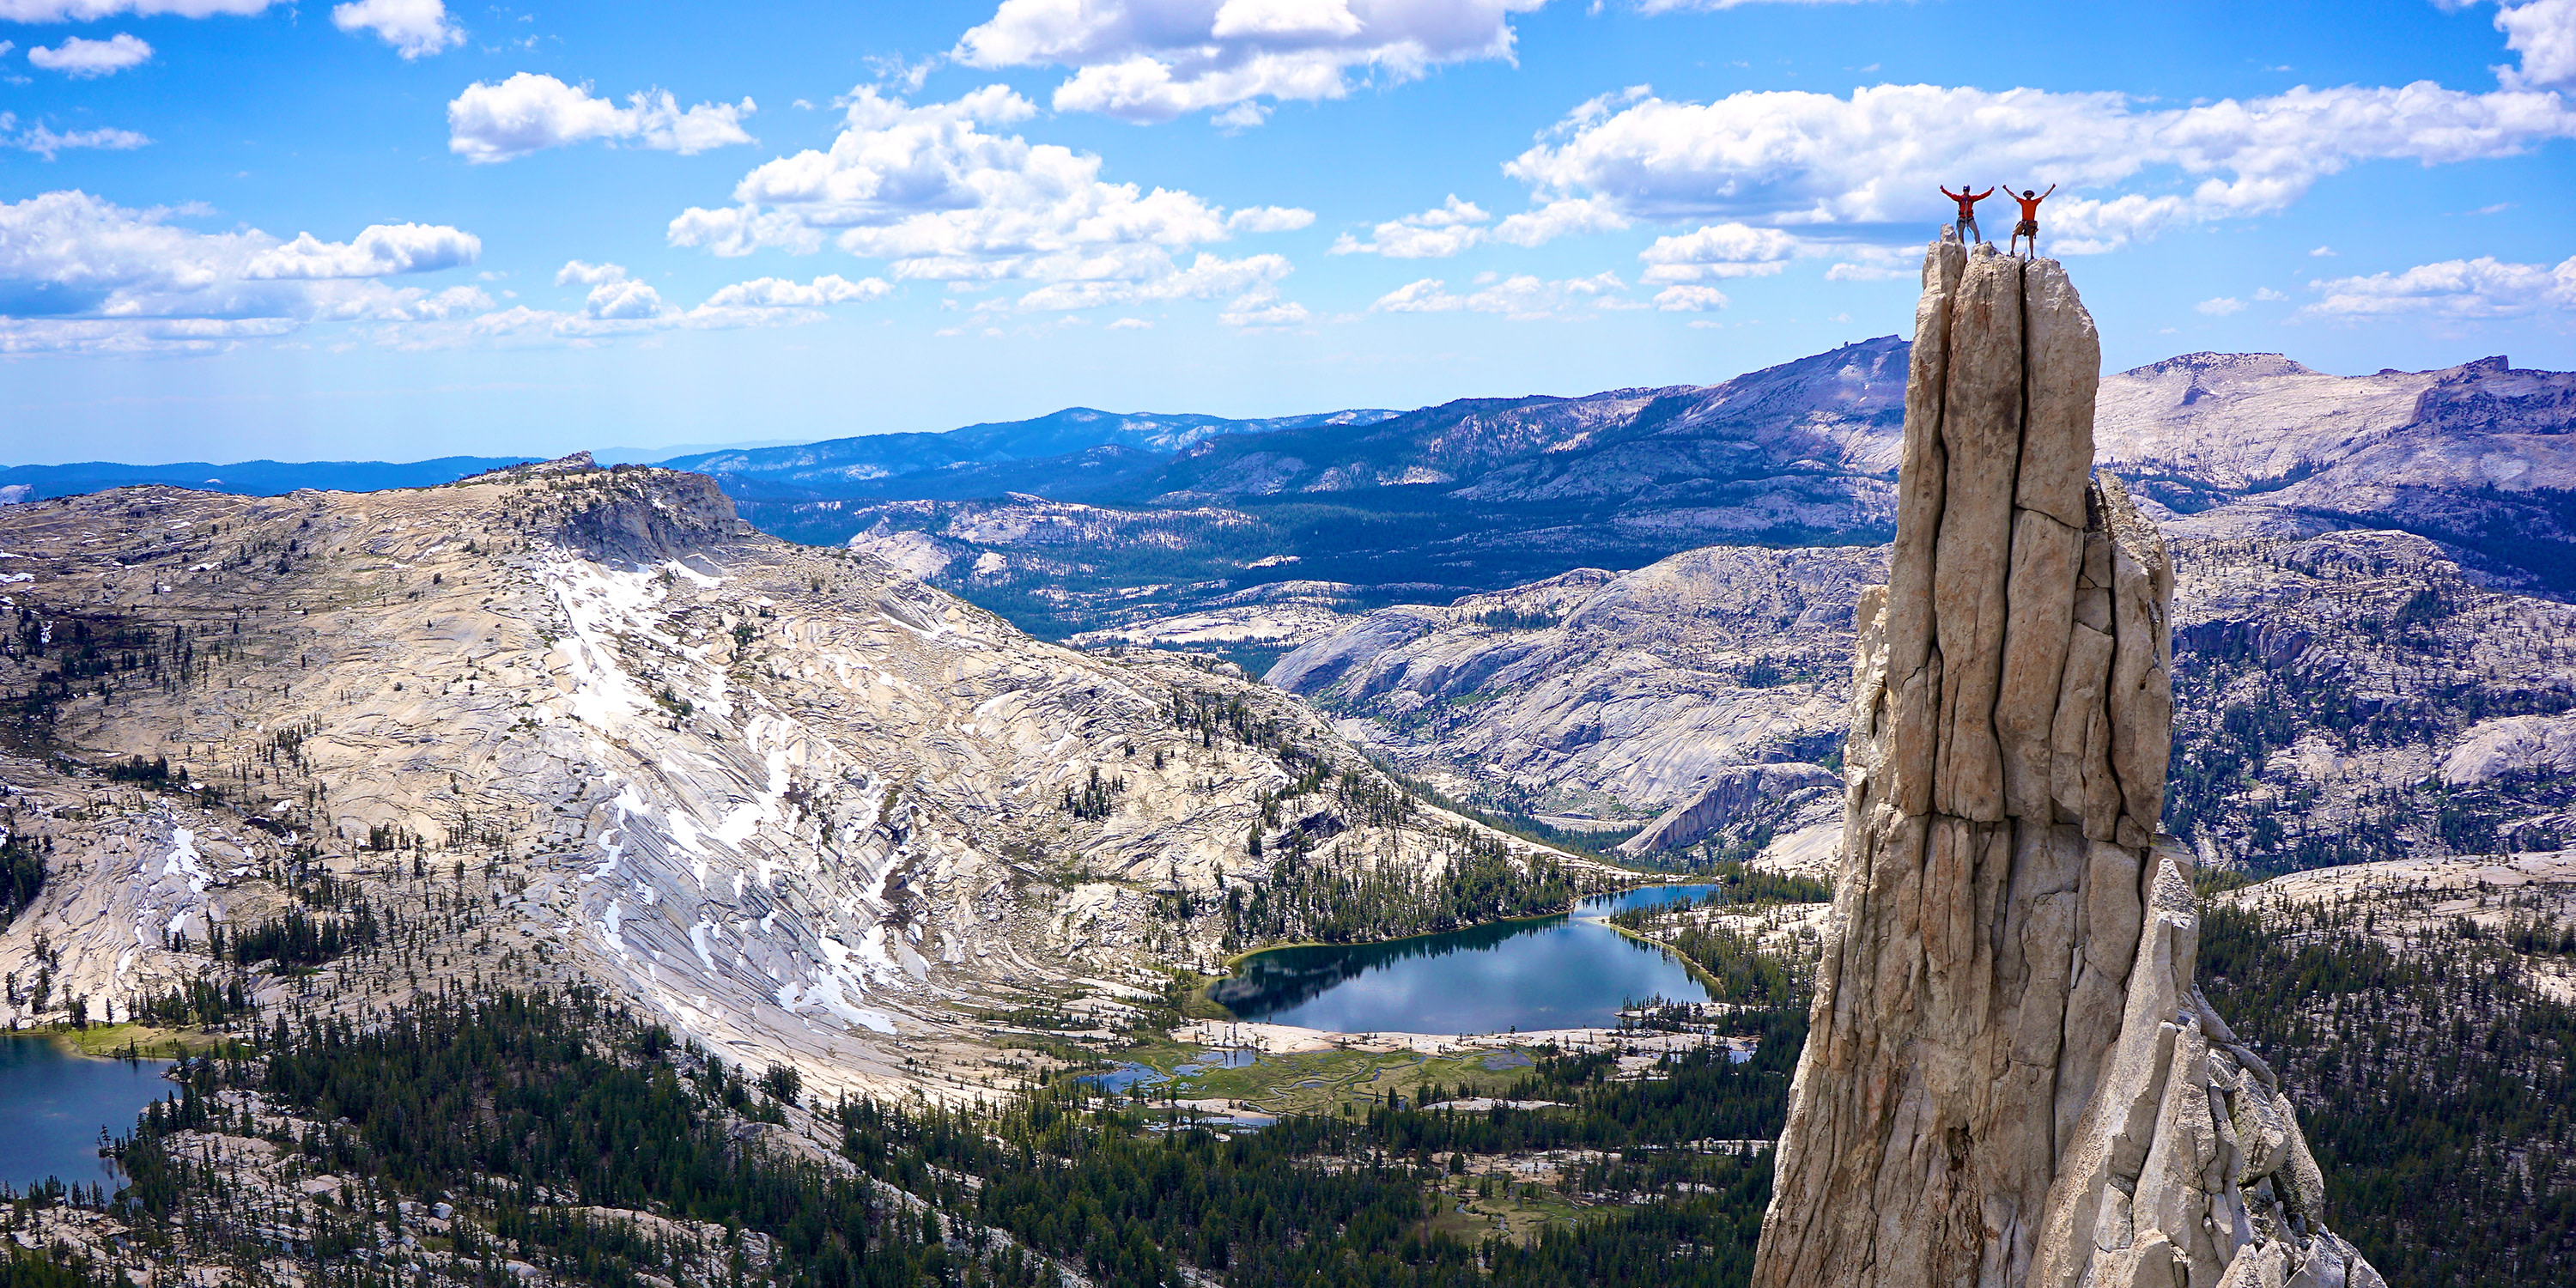 https://assets.goaaa.com/image/upload/w_auto,q_auto:best,f_auto/v1647562606/singularity-migrated-images/100Best-Yosemite-1-0-travel-top-destinations-adventures-where-to-go-california-utah-arizona-nevada-montana-wyoming-via-magazine-TandemStock_42325432.jpg.jpg